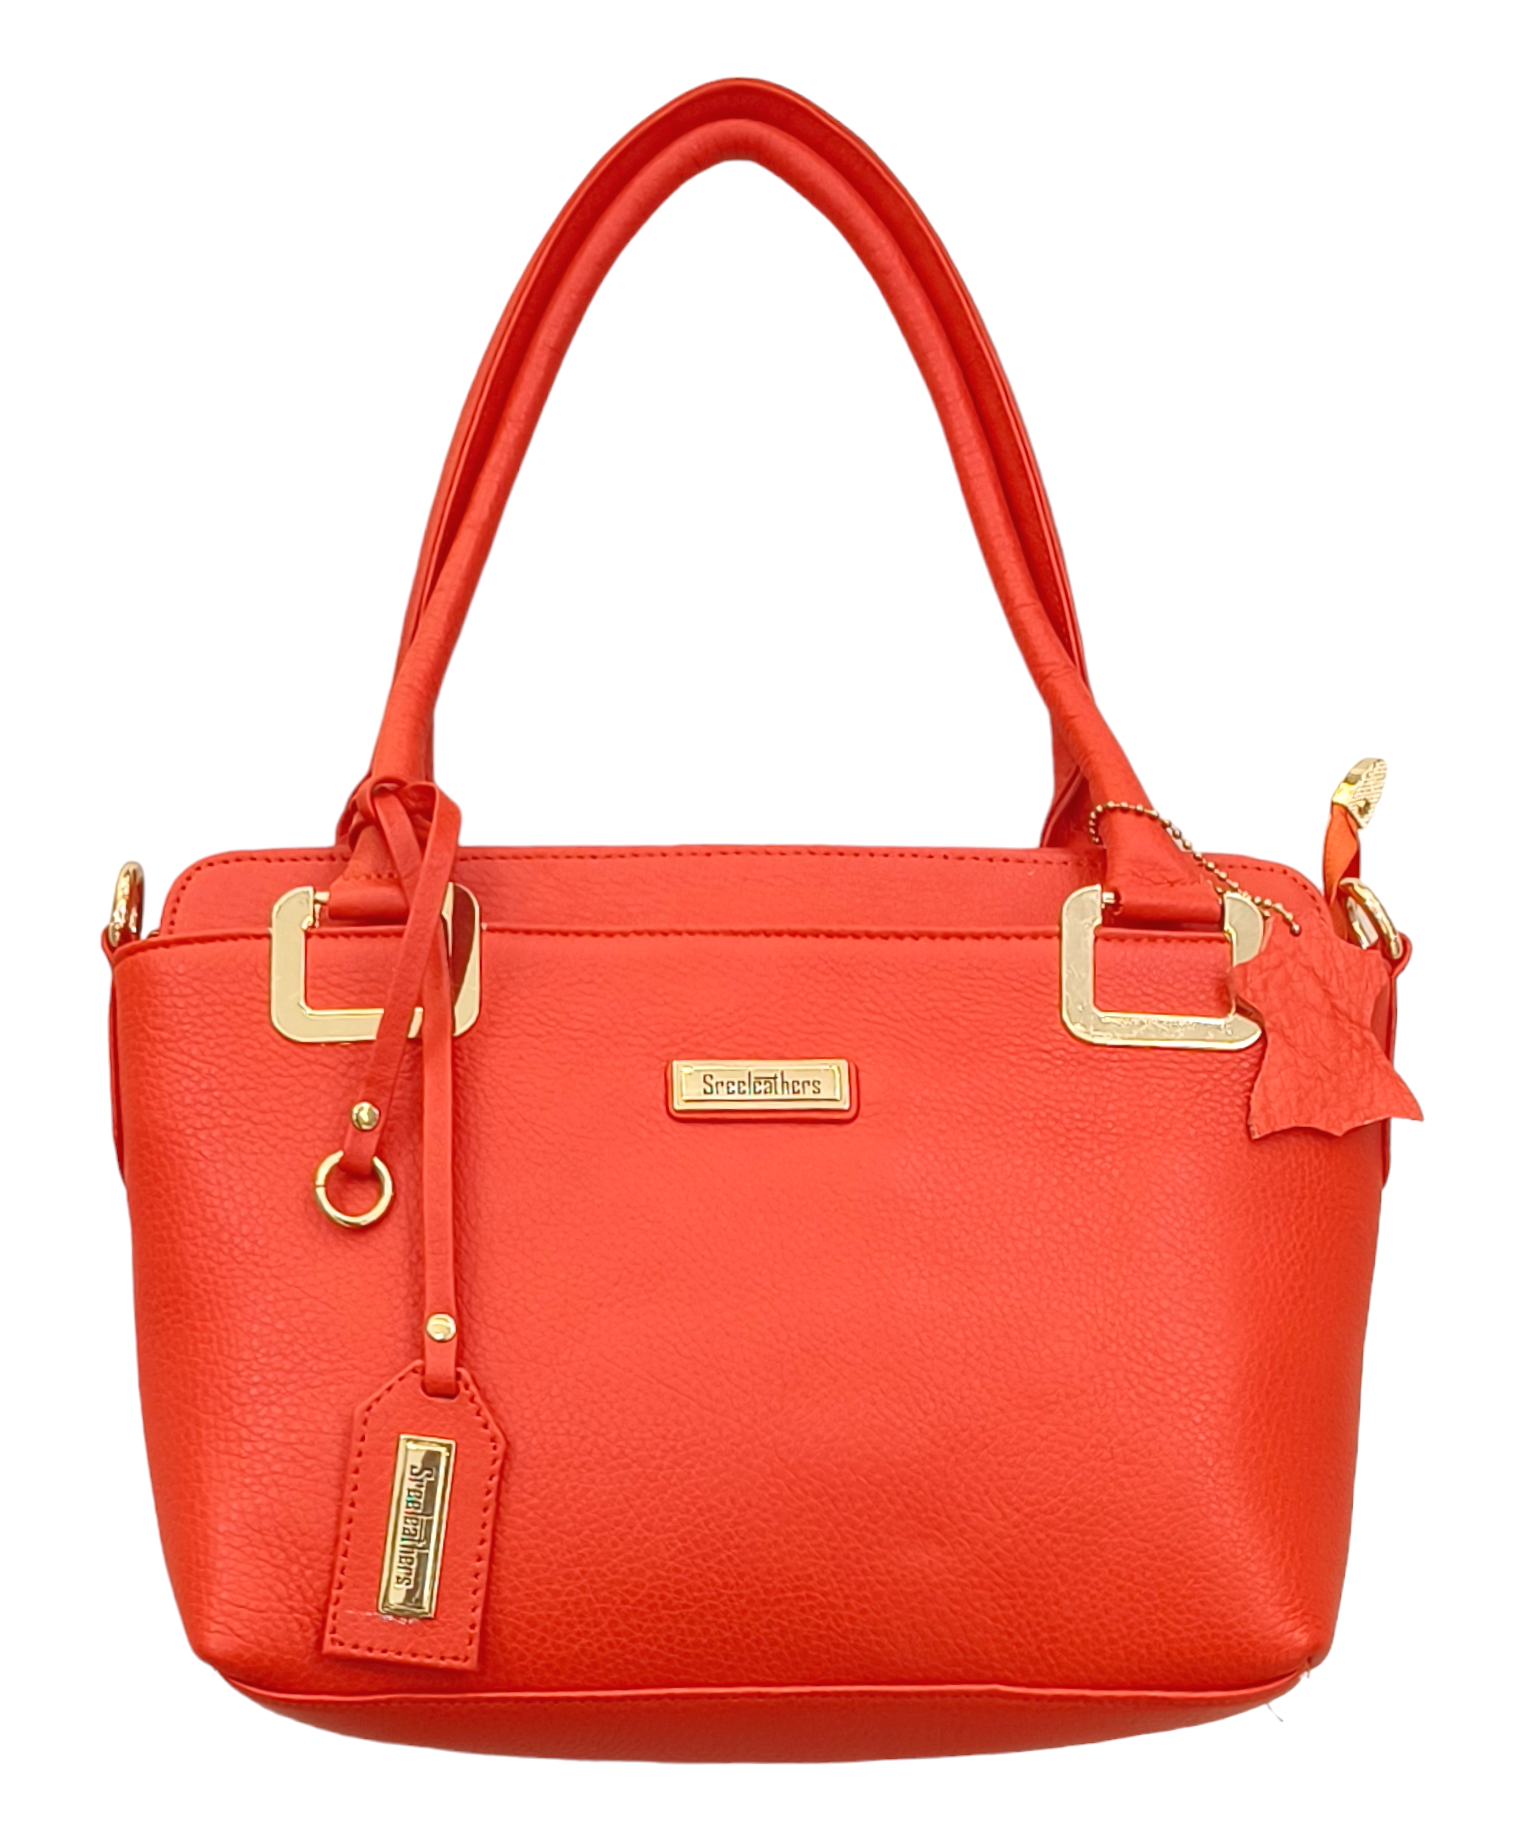 Zip Purse Ladies Leather Wallet Long Card Holder Clutch Handbag | Fruugo KR